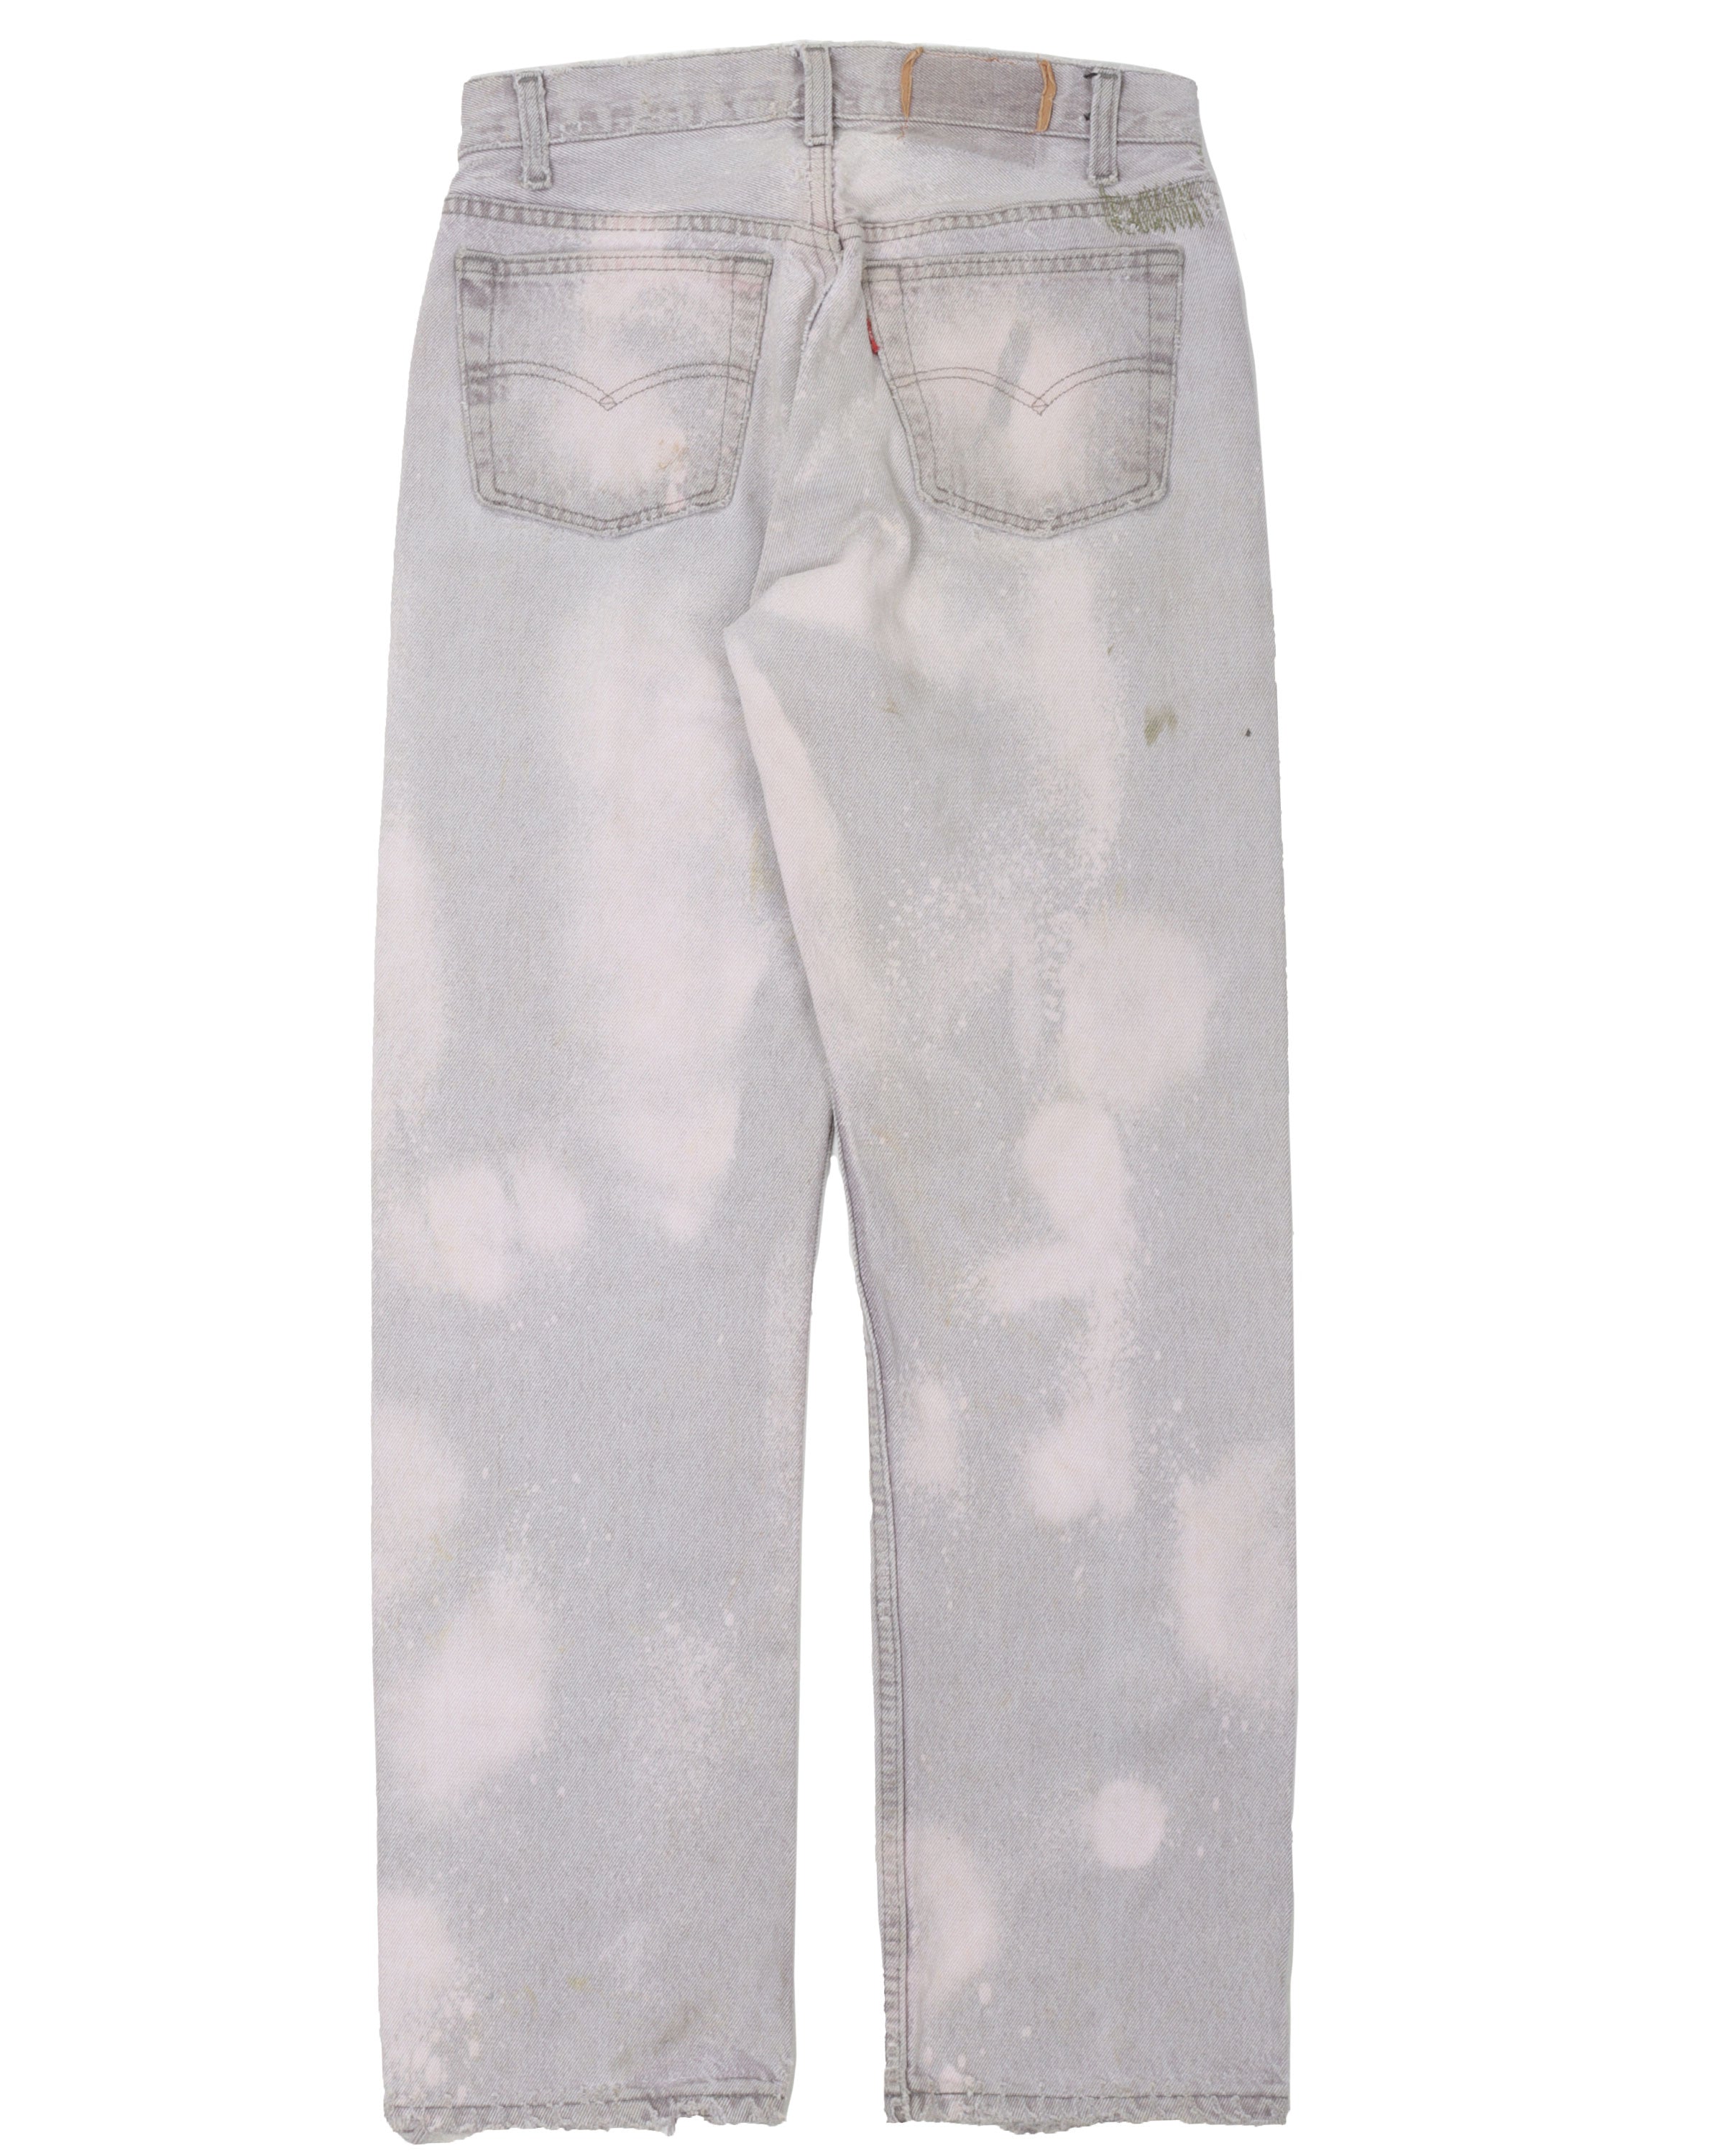 Vintage Levi's 501 Light Grey Jeans